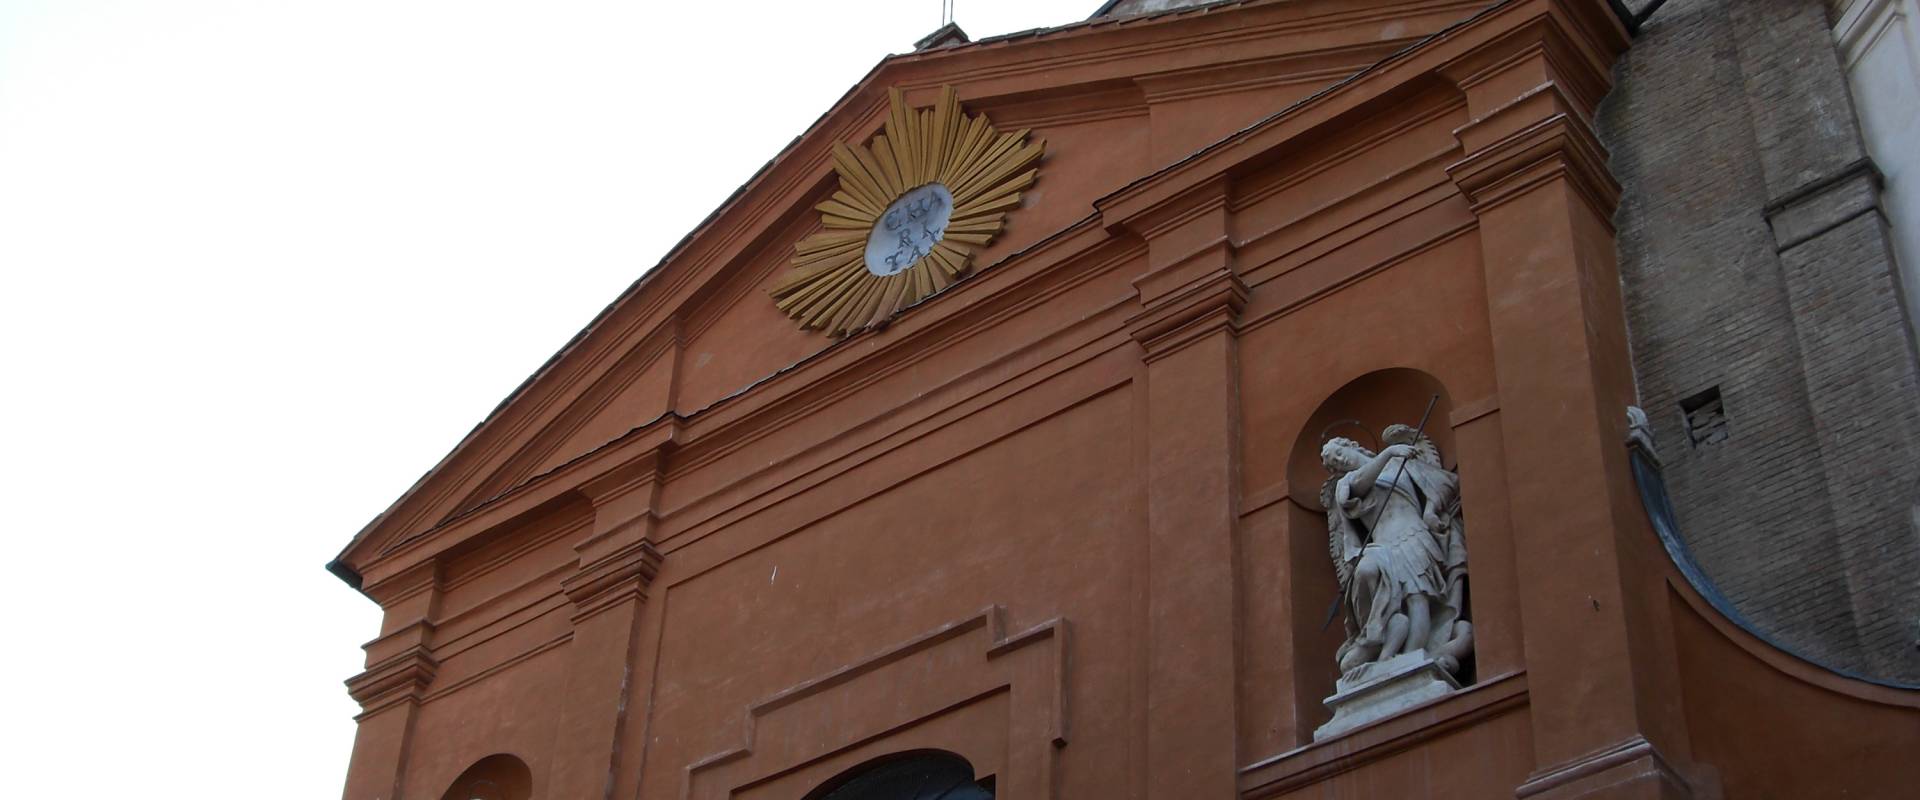 Chiesa di San Barnaba a Modena foto di Matteolel